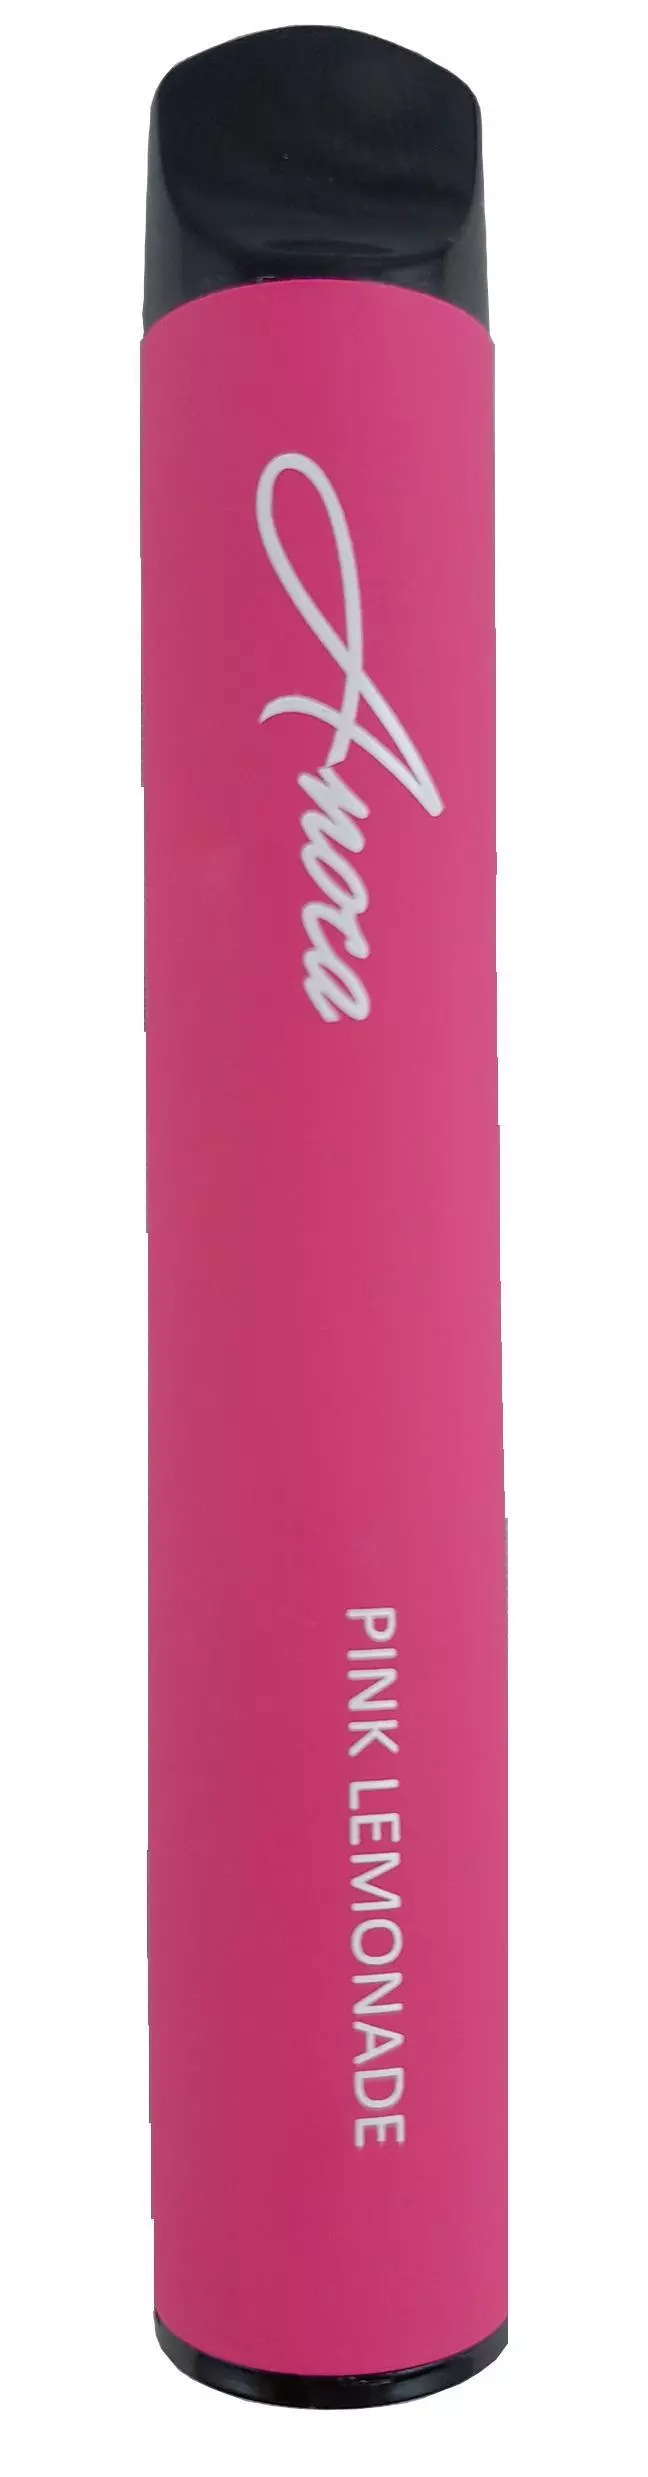 Anoca 500 E-Shisha Pink 17mg/ml Nikotin